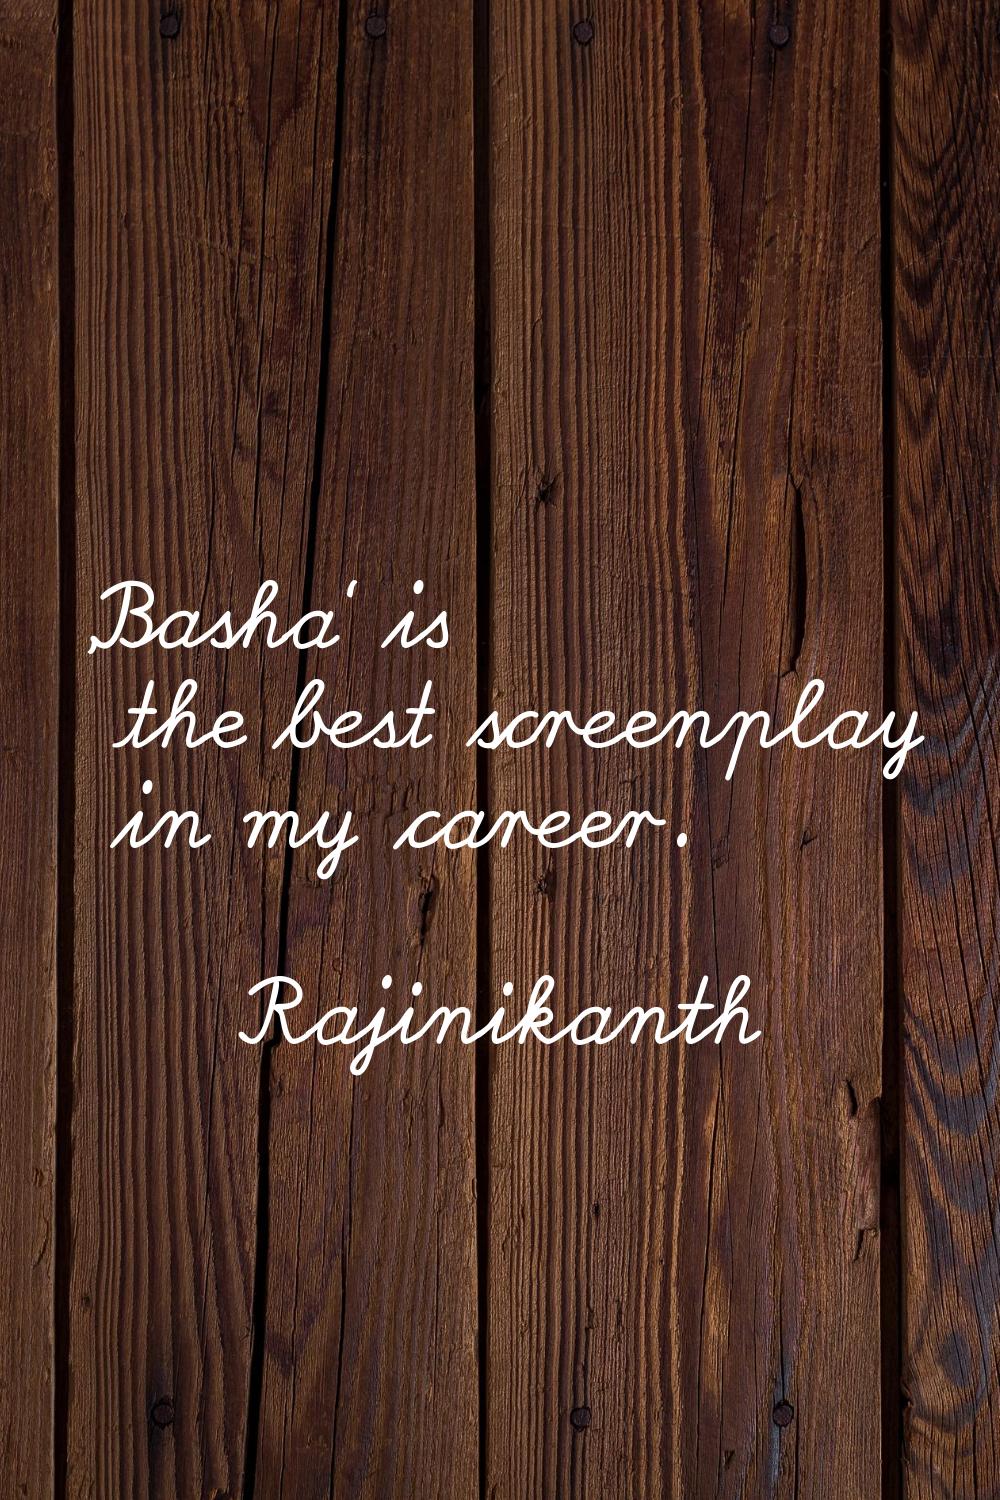 'Basha' is the best screenplay in my career.